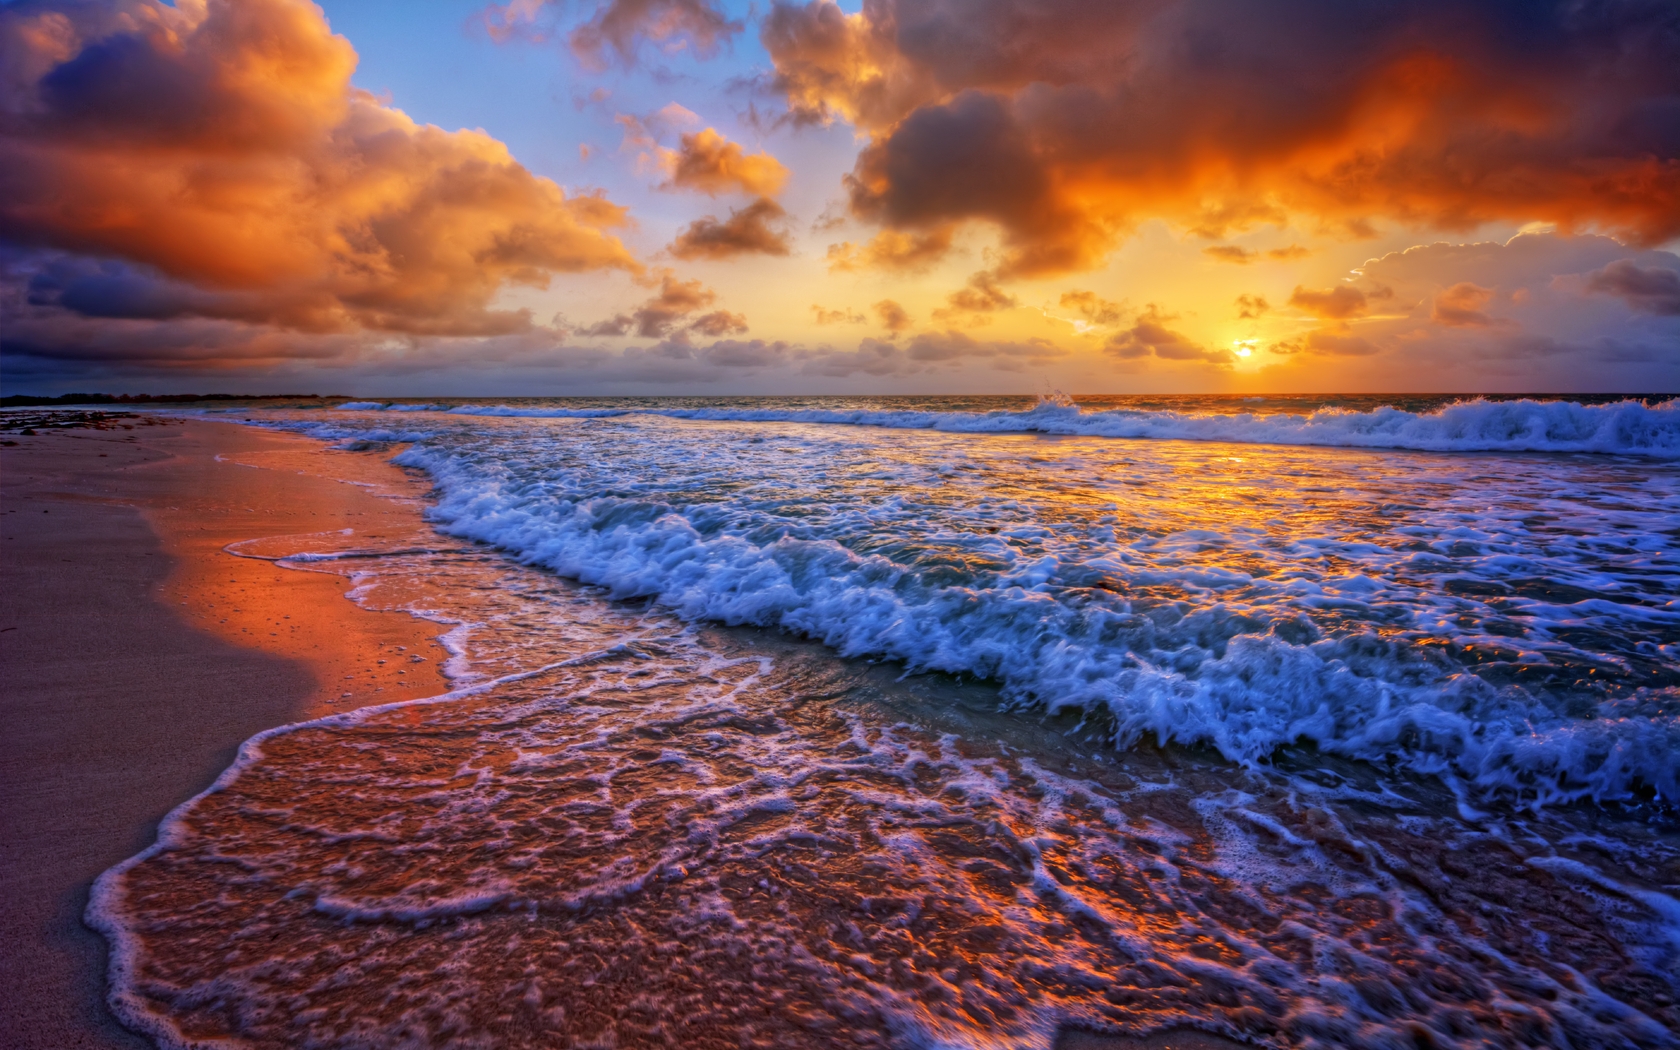 Картинка: Вода, море, океан, суша, песок, волны, пена, небо, облака, горизонт, пейзаж, закат